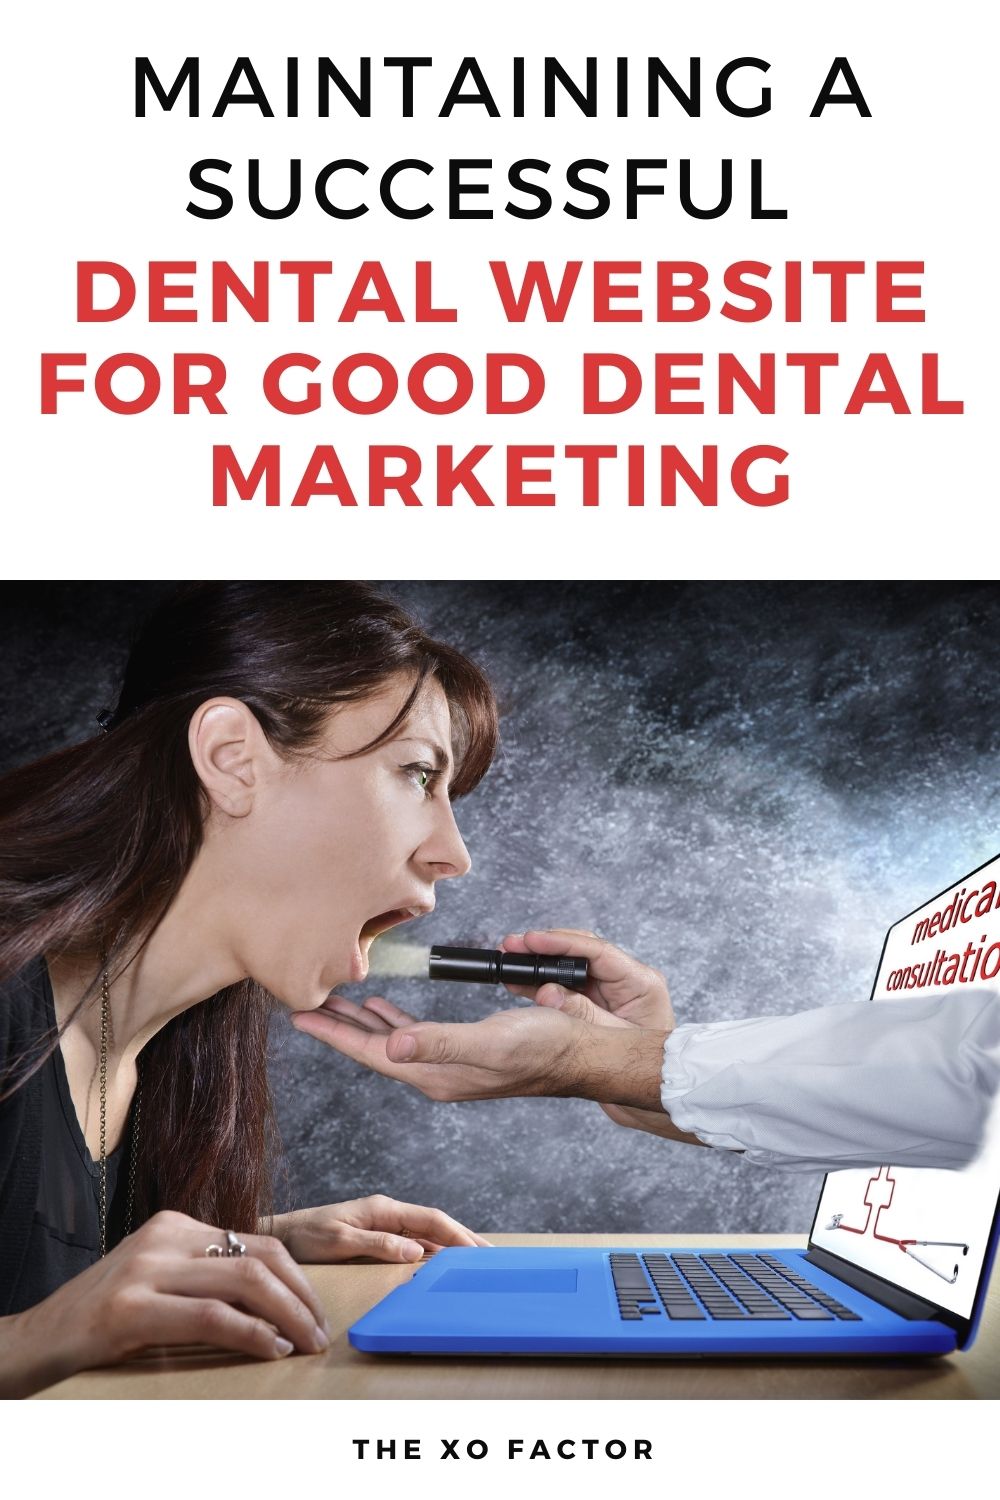 Maintaining a successful dental website for good dental marketing